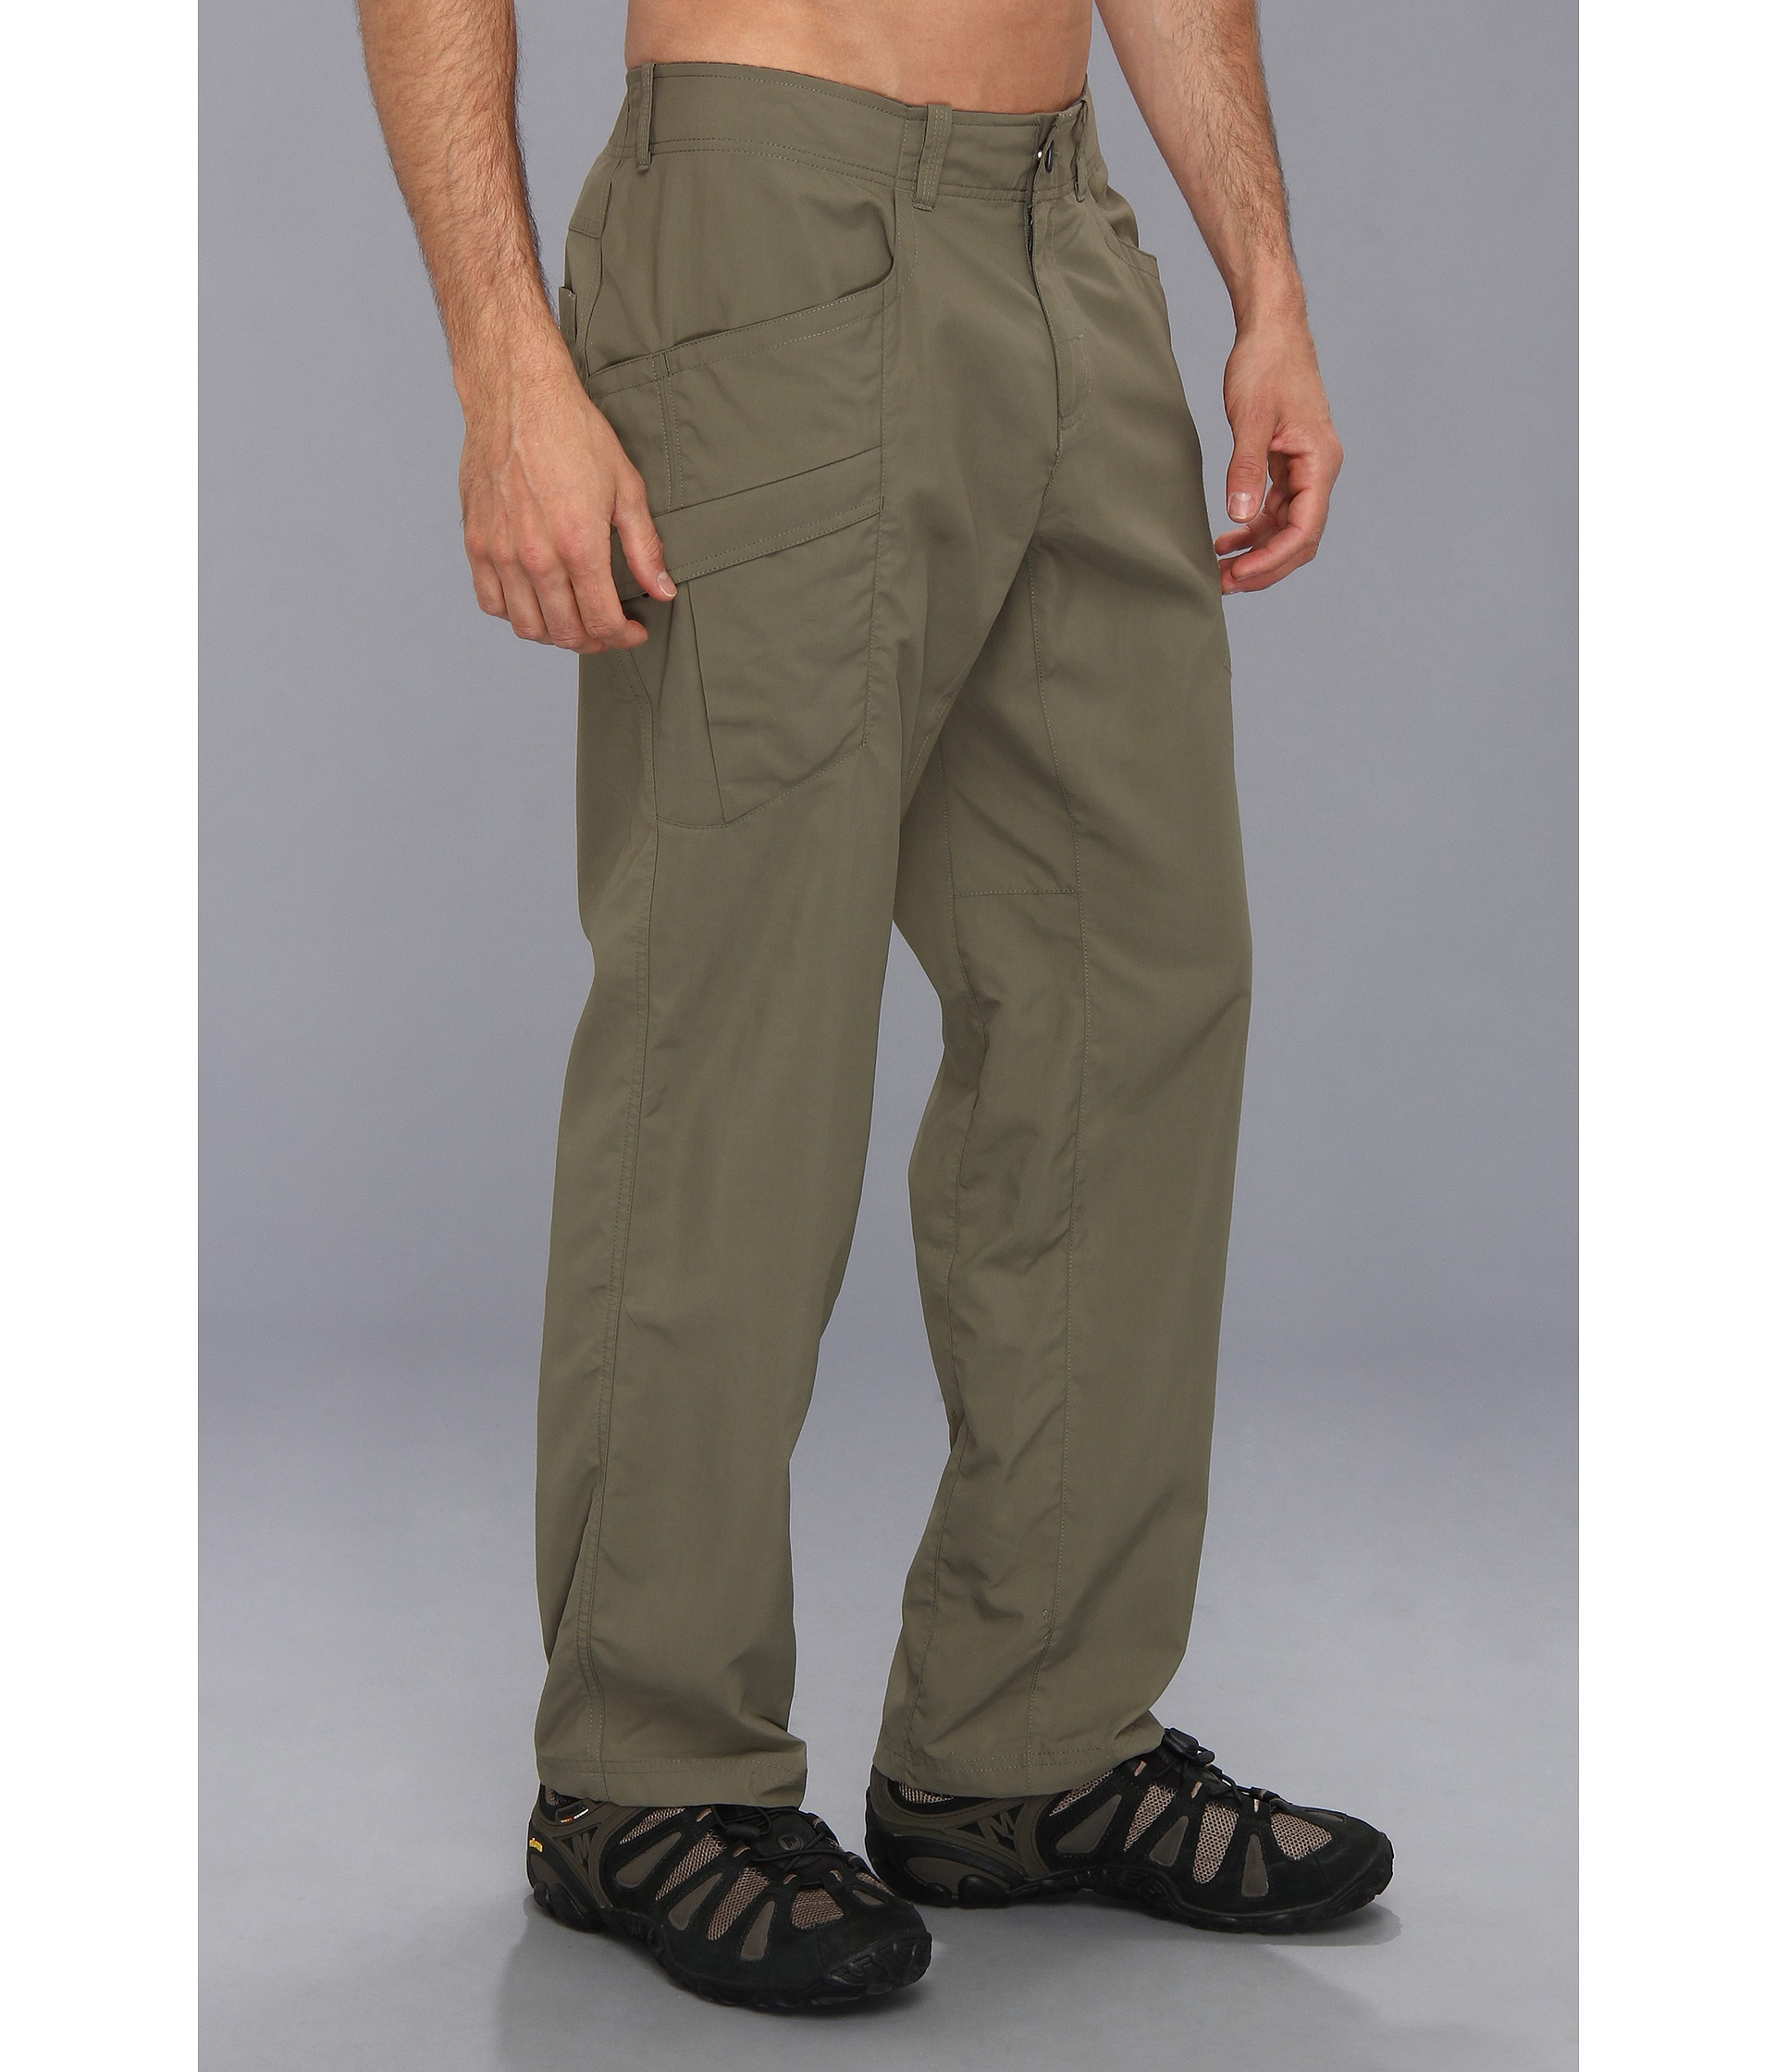 Lyst - Mountain Hardwear Mesa™ V2 Pant in Green for Men